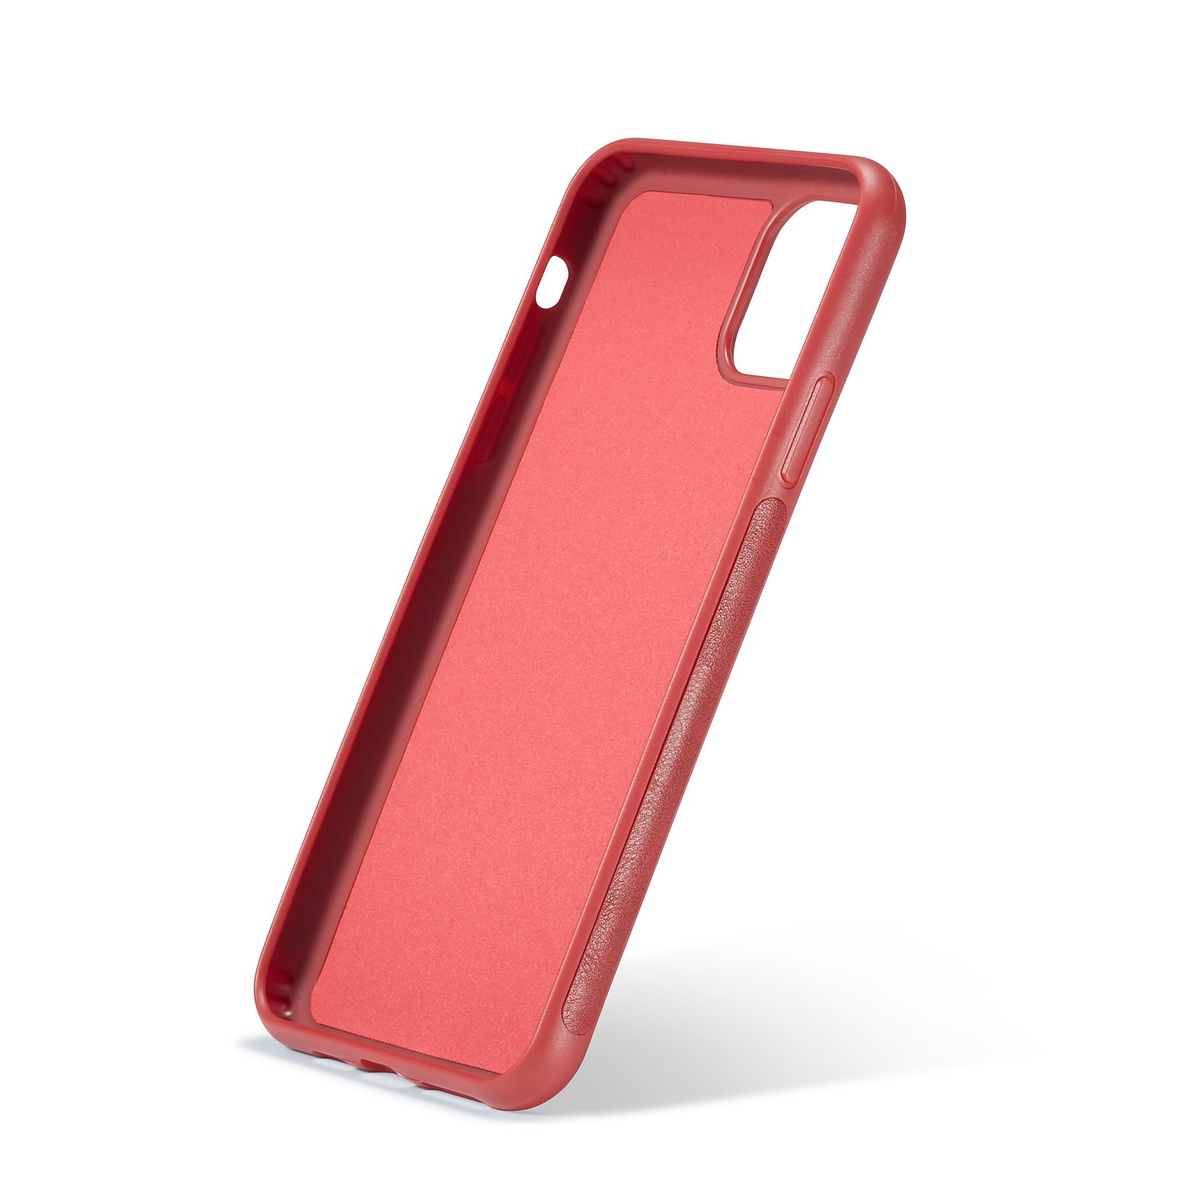 BRG Luxury plånboksfodral med ställ, iPhone 11 Pro, röd